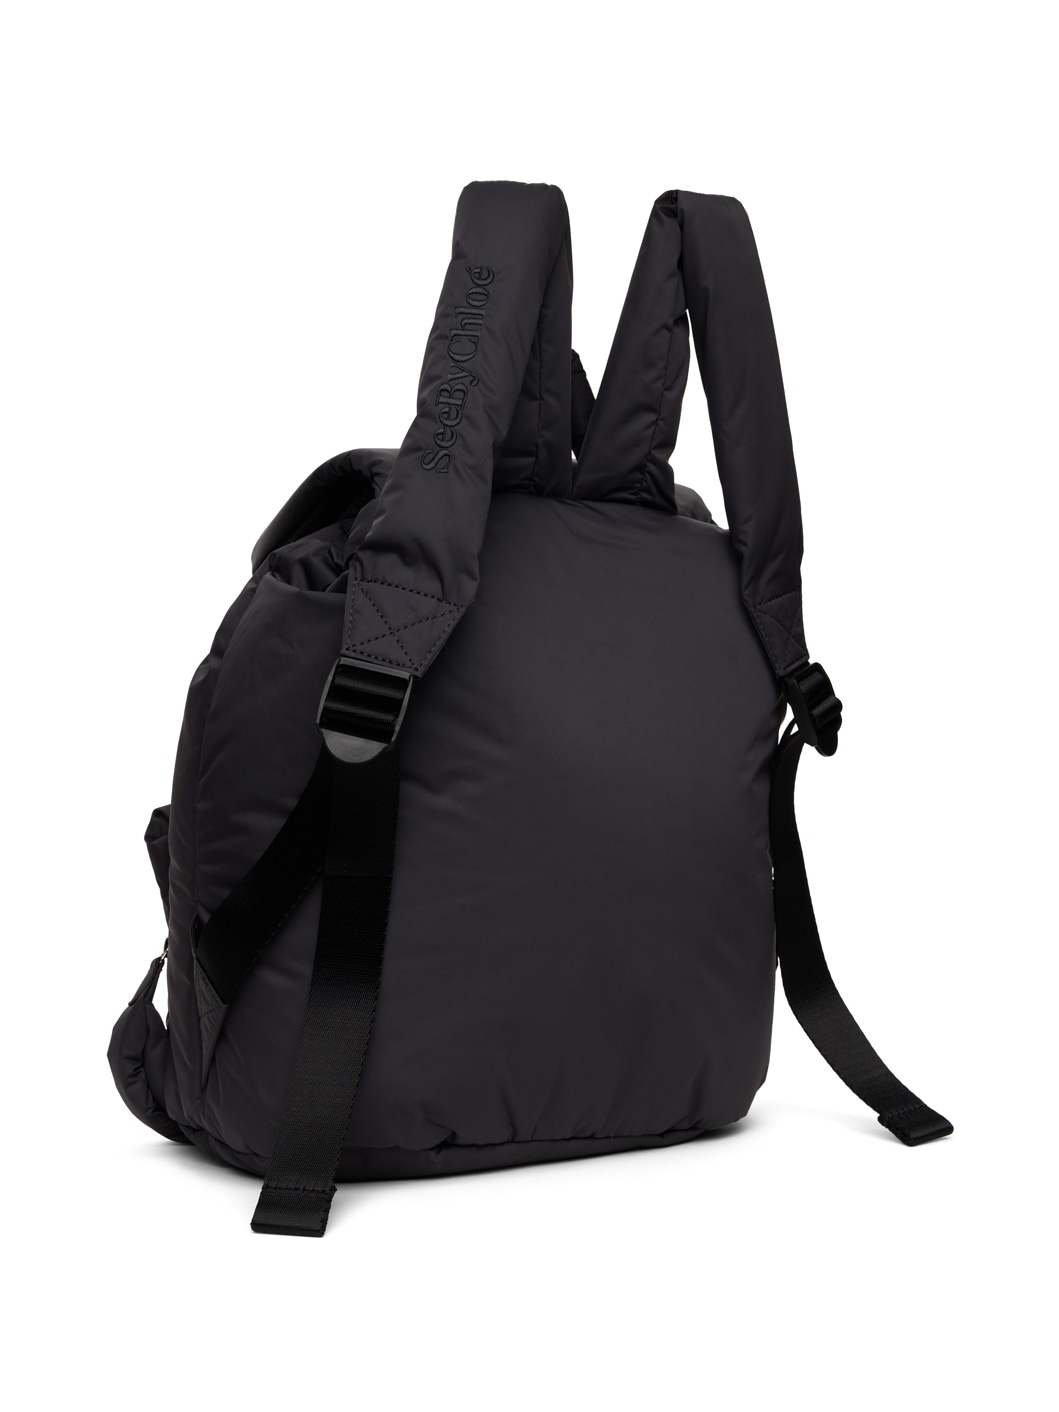 Gray Joy Rider Backpack - 3